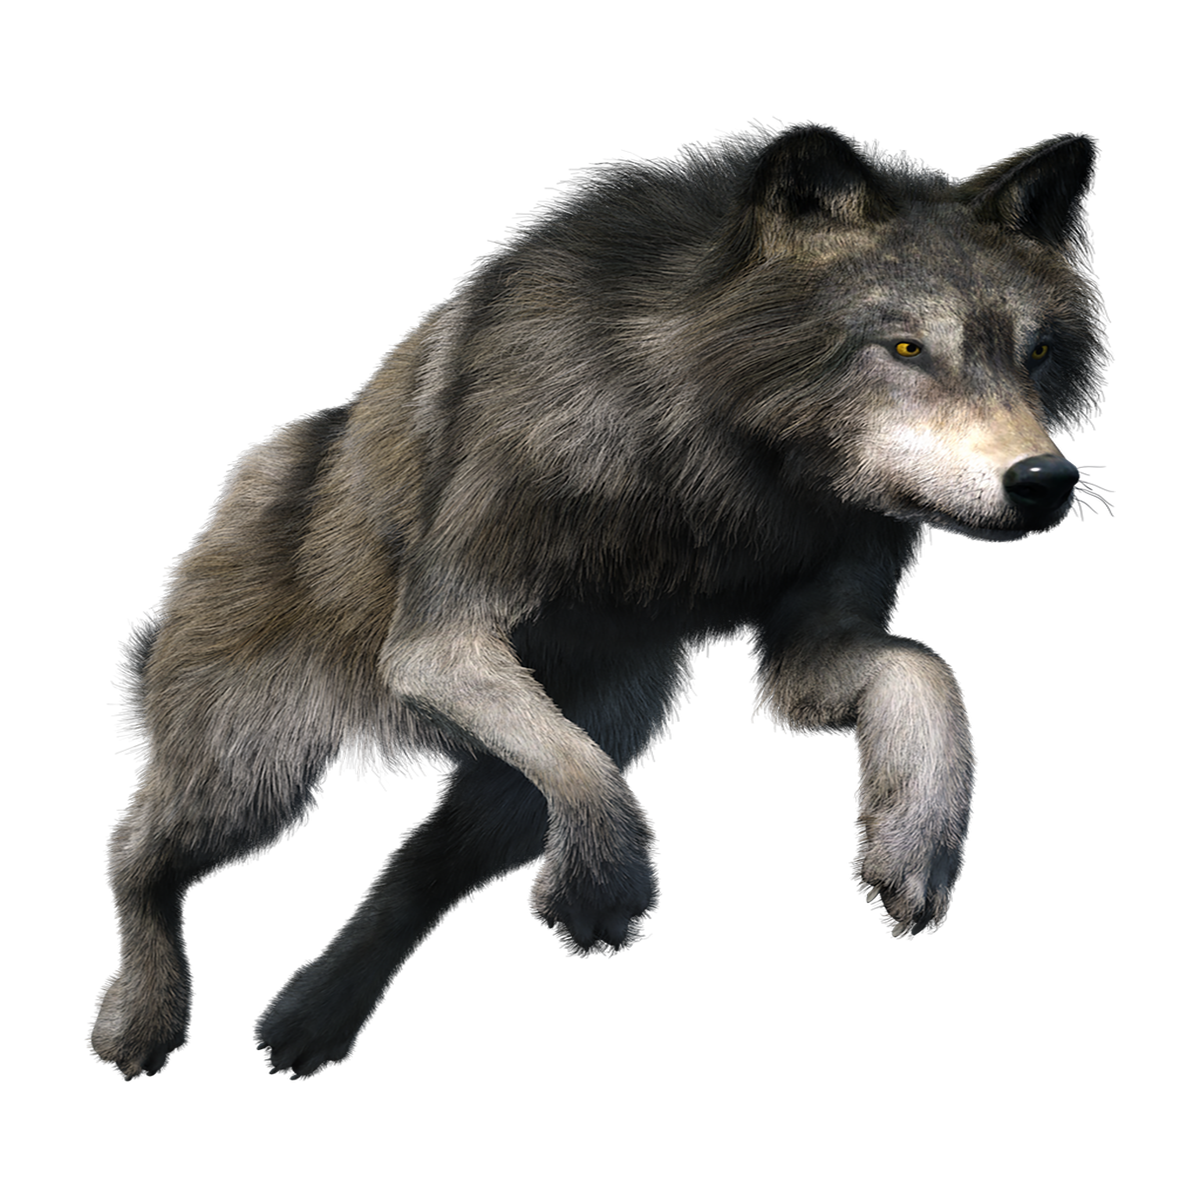 Wolf Transparent Image